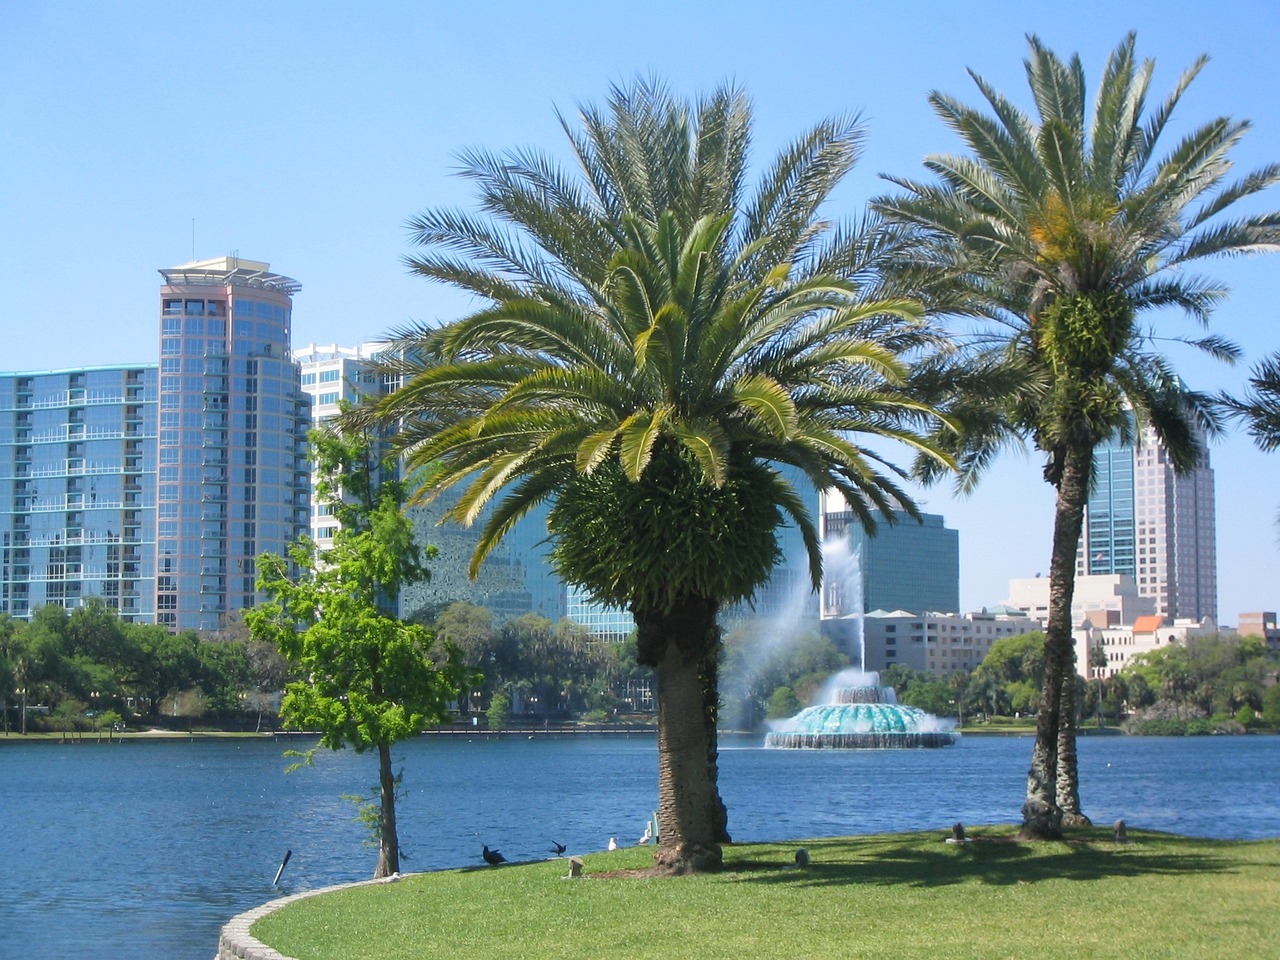 Orlando, FL: The Theme Park Capital of the World